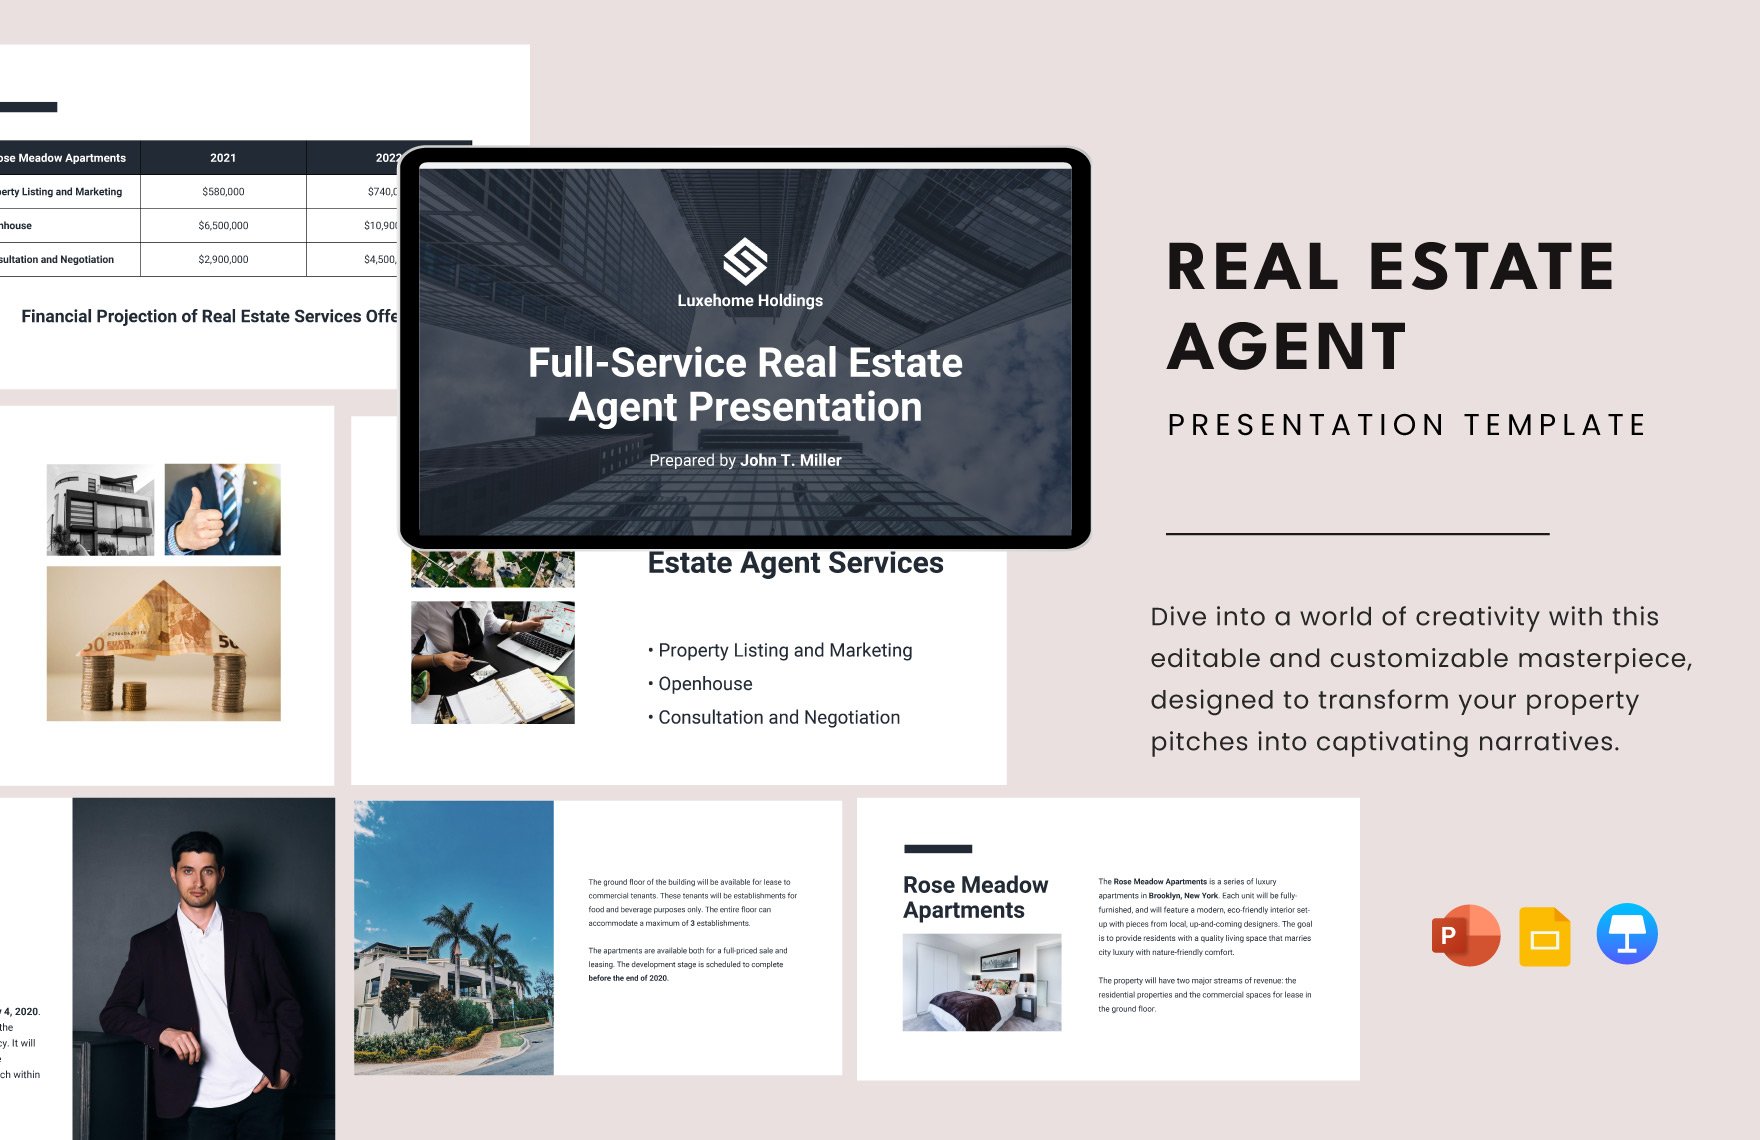 Real Estate Agent Presentation Template